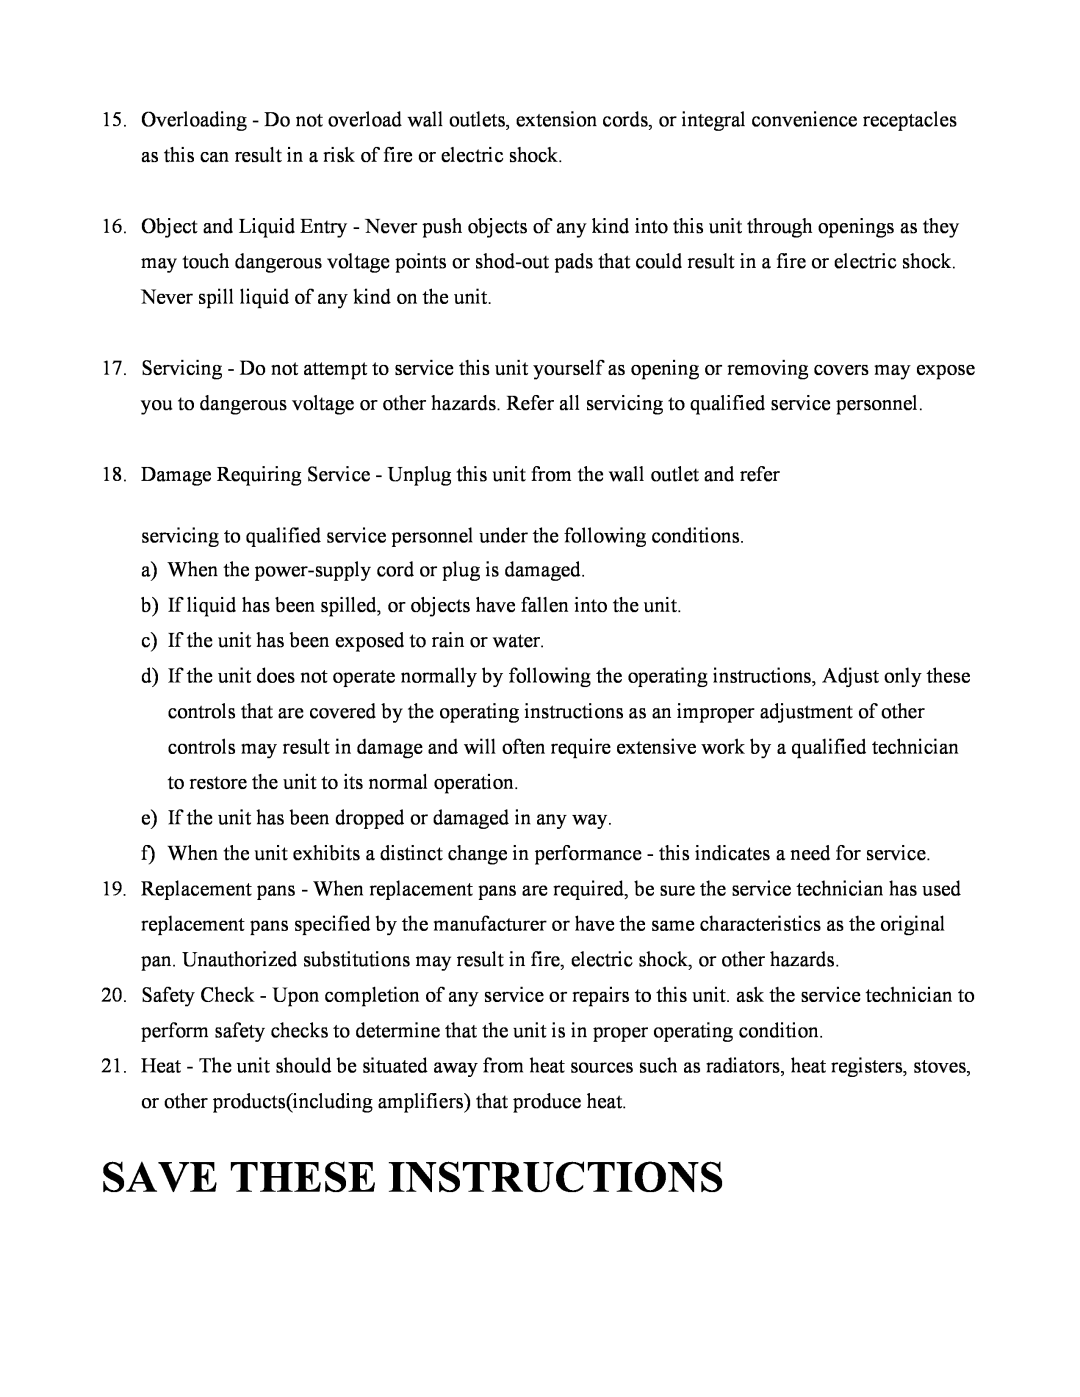 Eiki V-2500 instruction manual Save These Instructions 